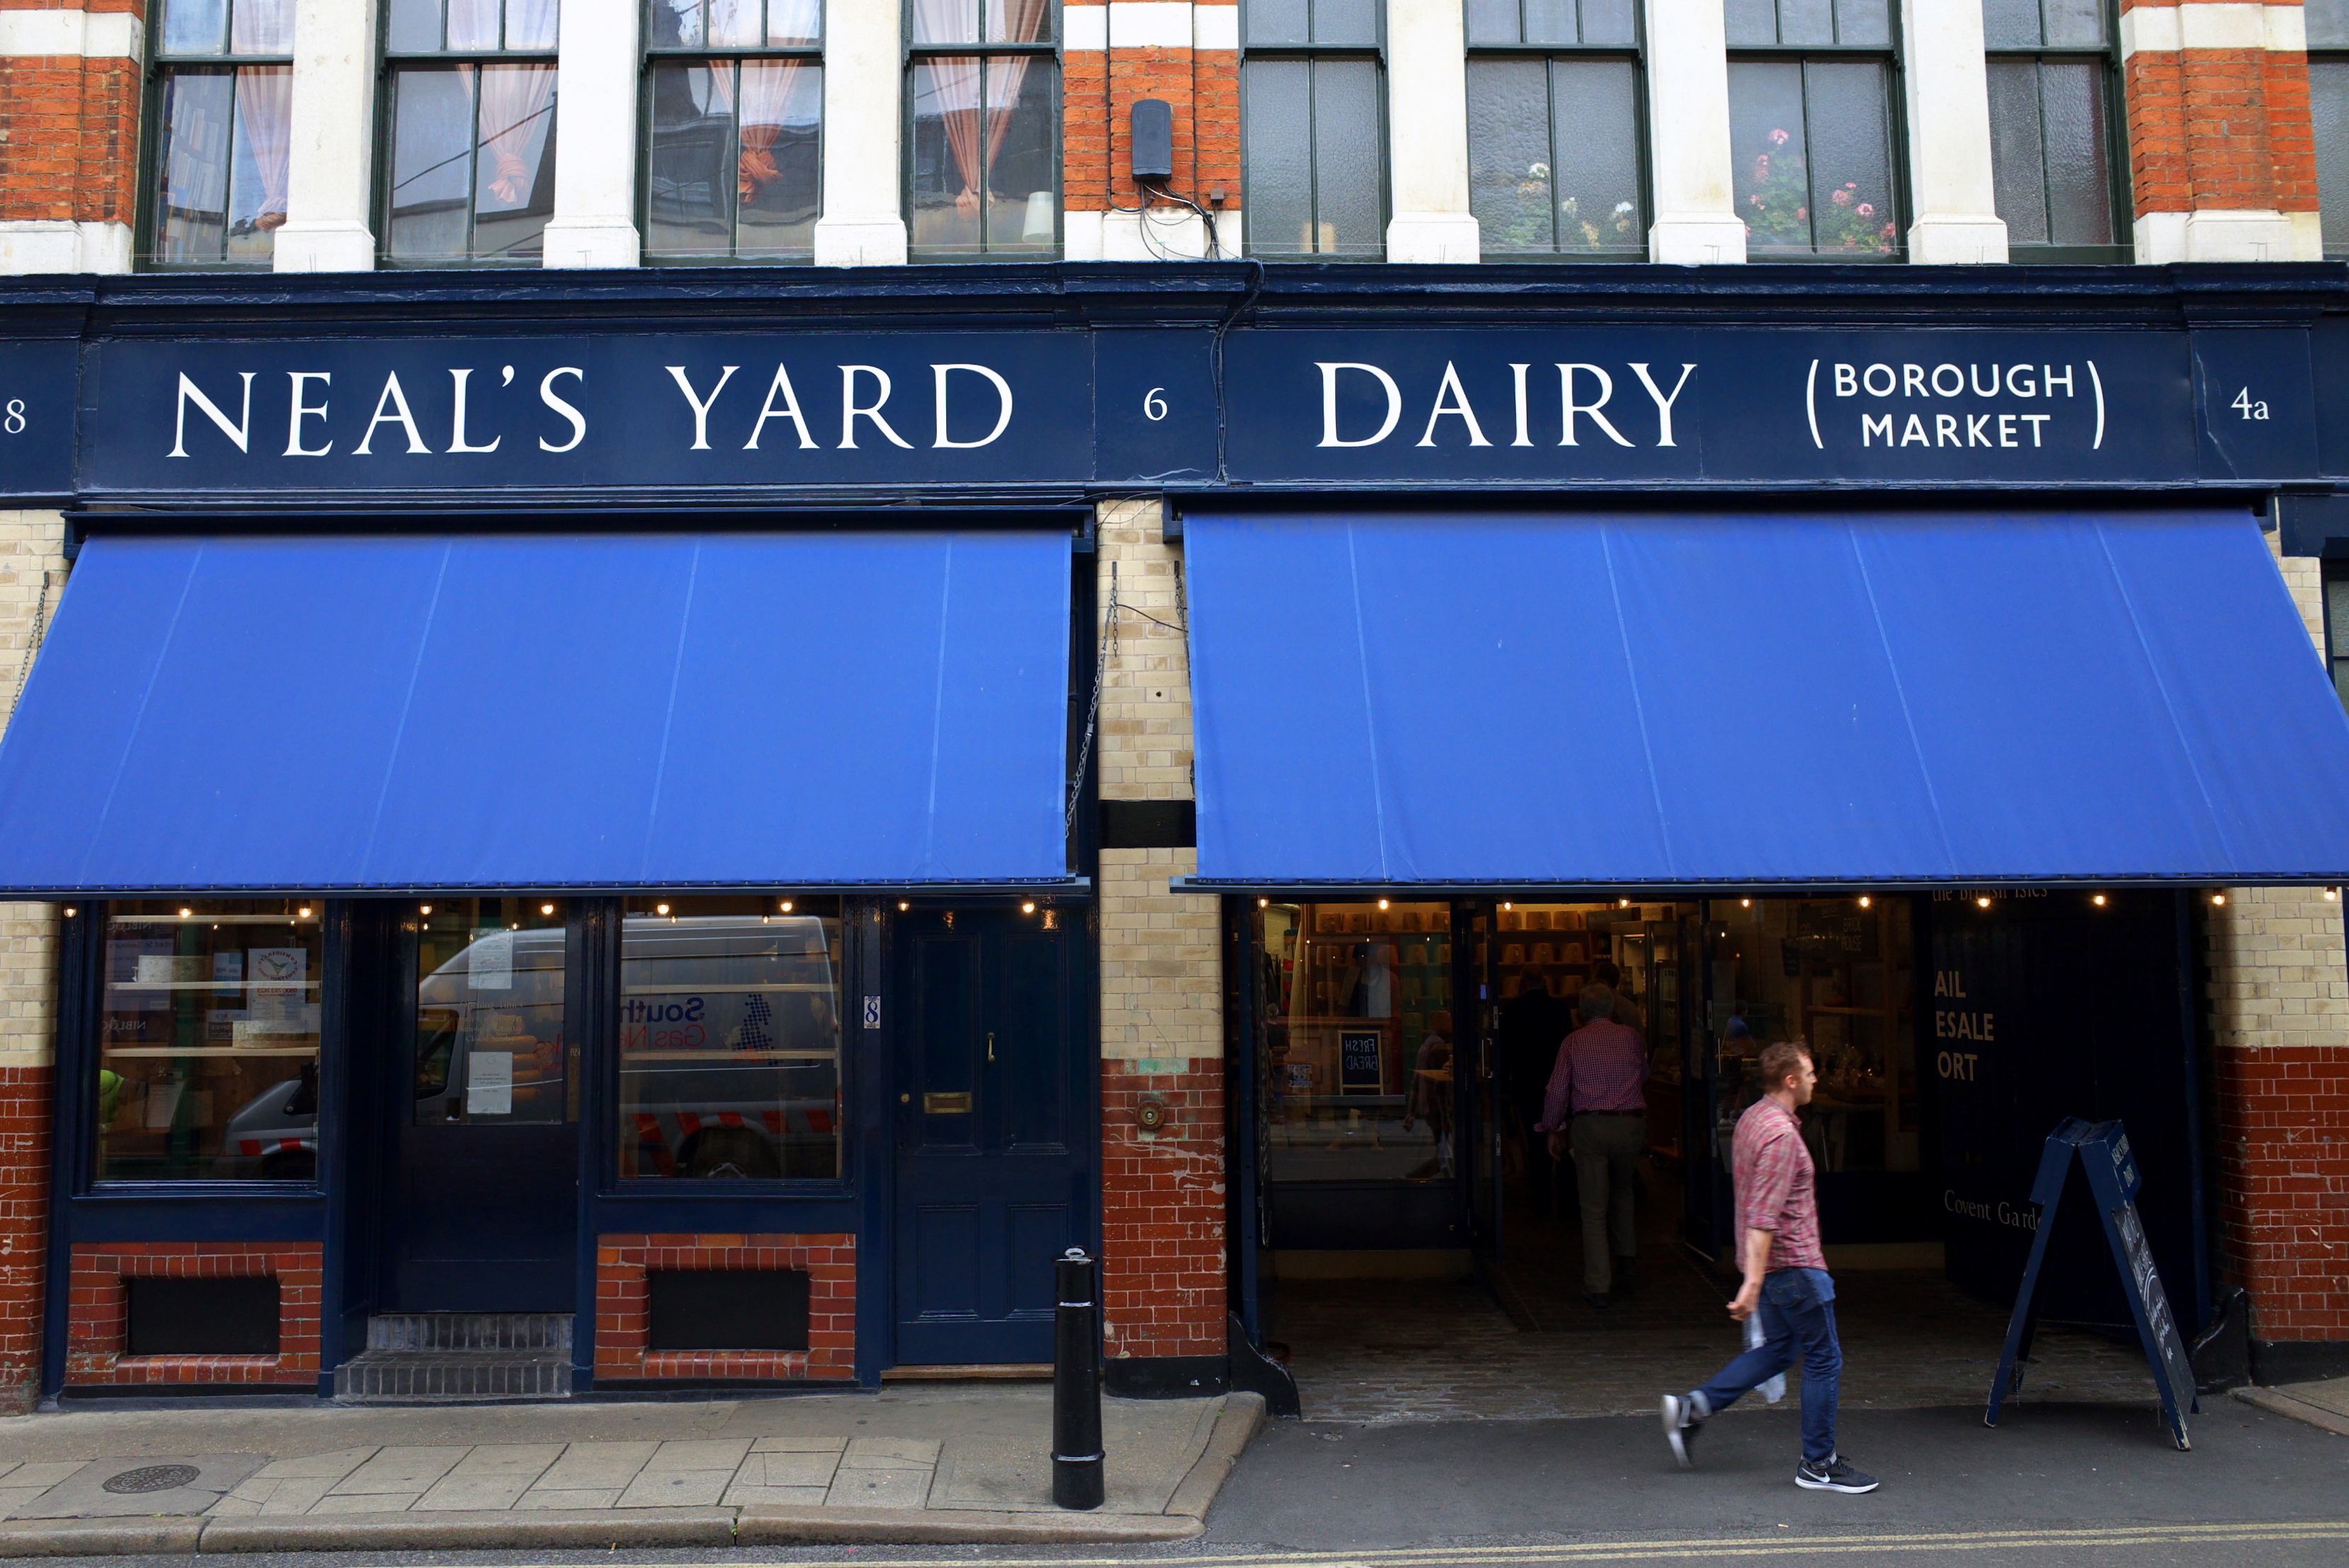 Neal's Yard Dairy